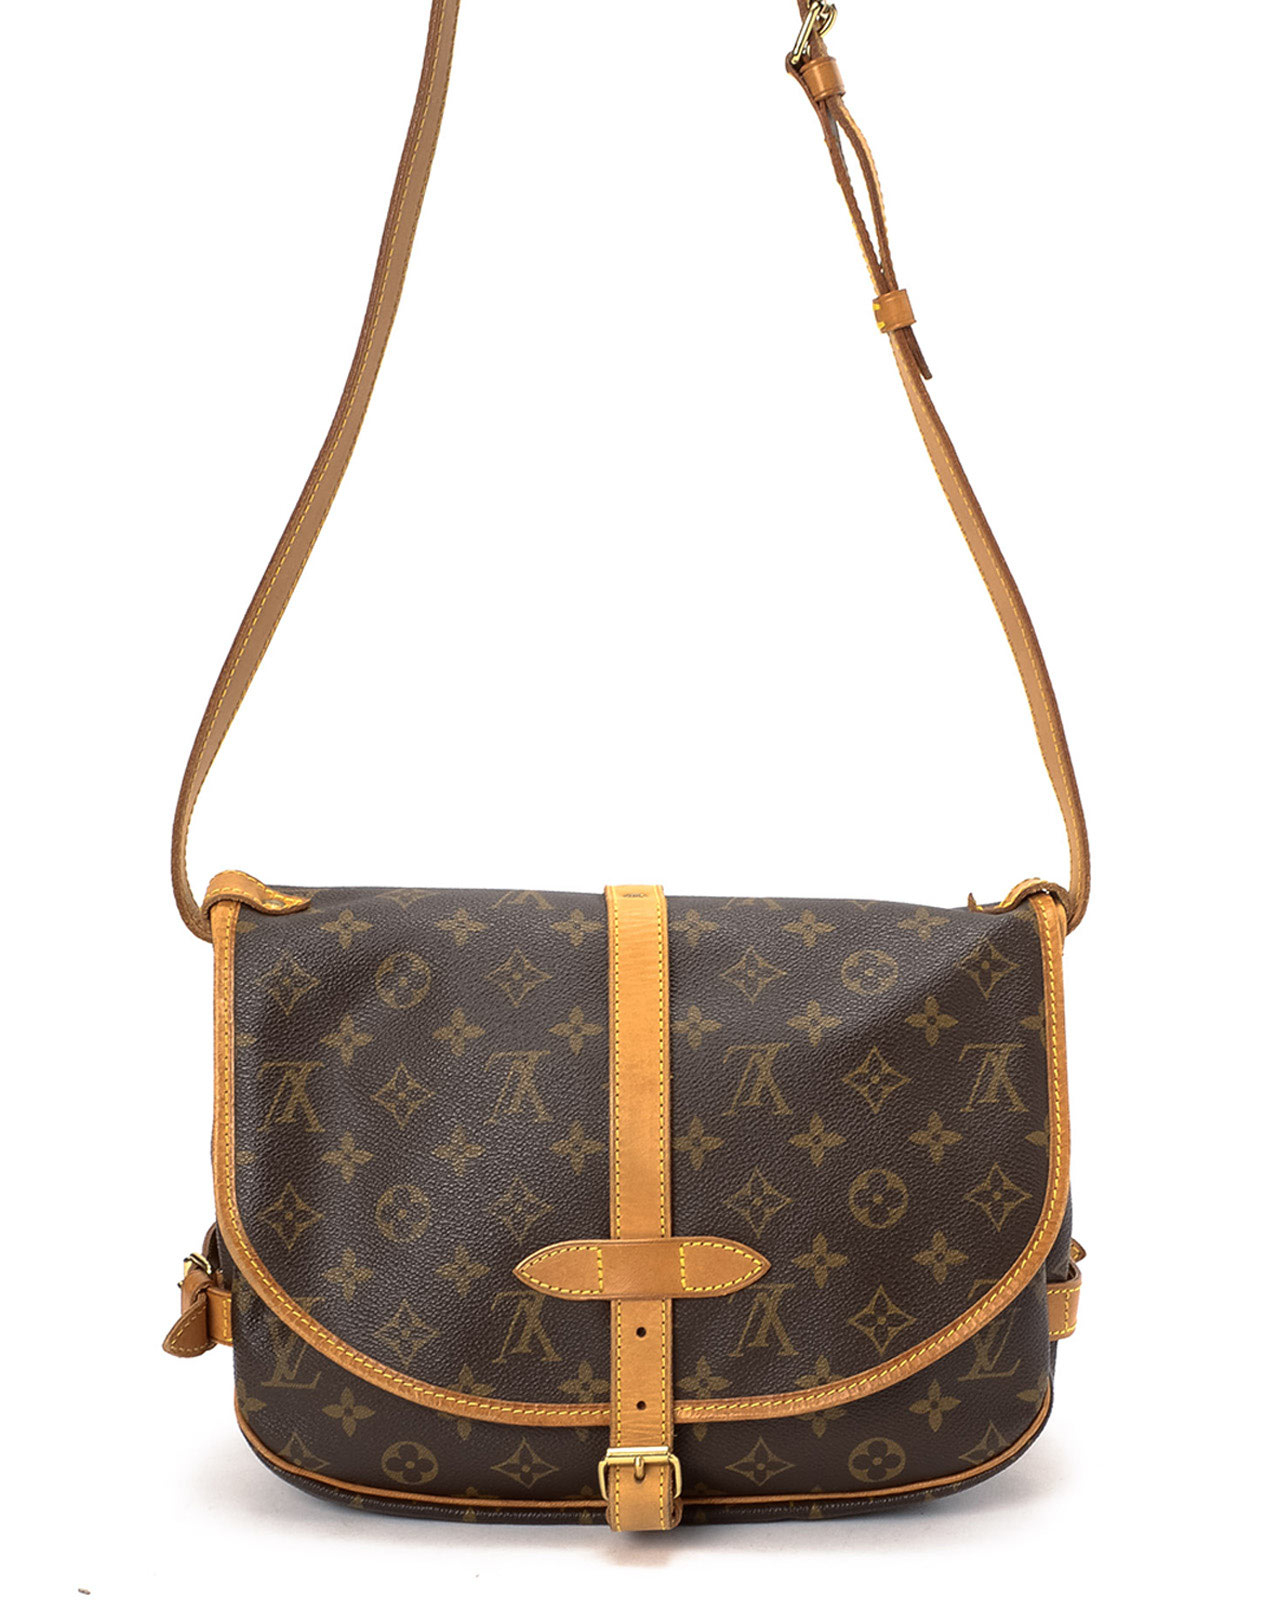 Lyst - Louis Vuitton Monogram Saumur 30 Shoulder Bag in Brown